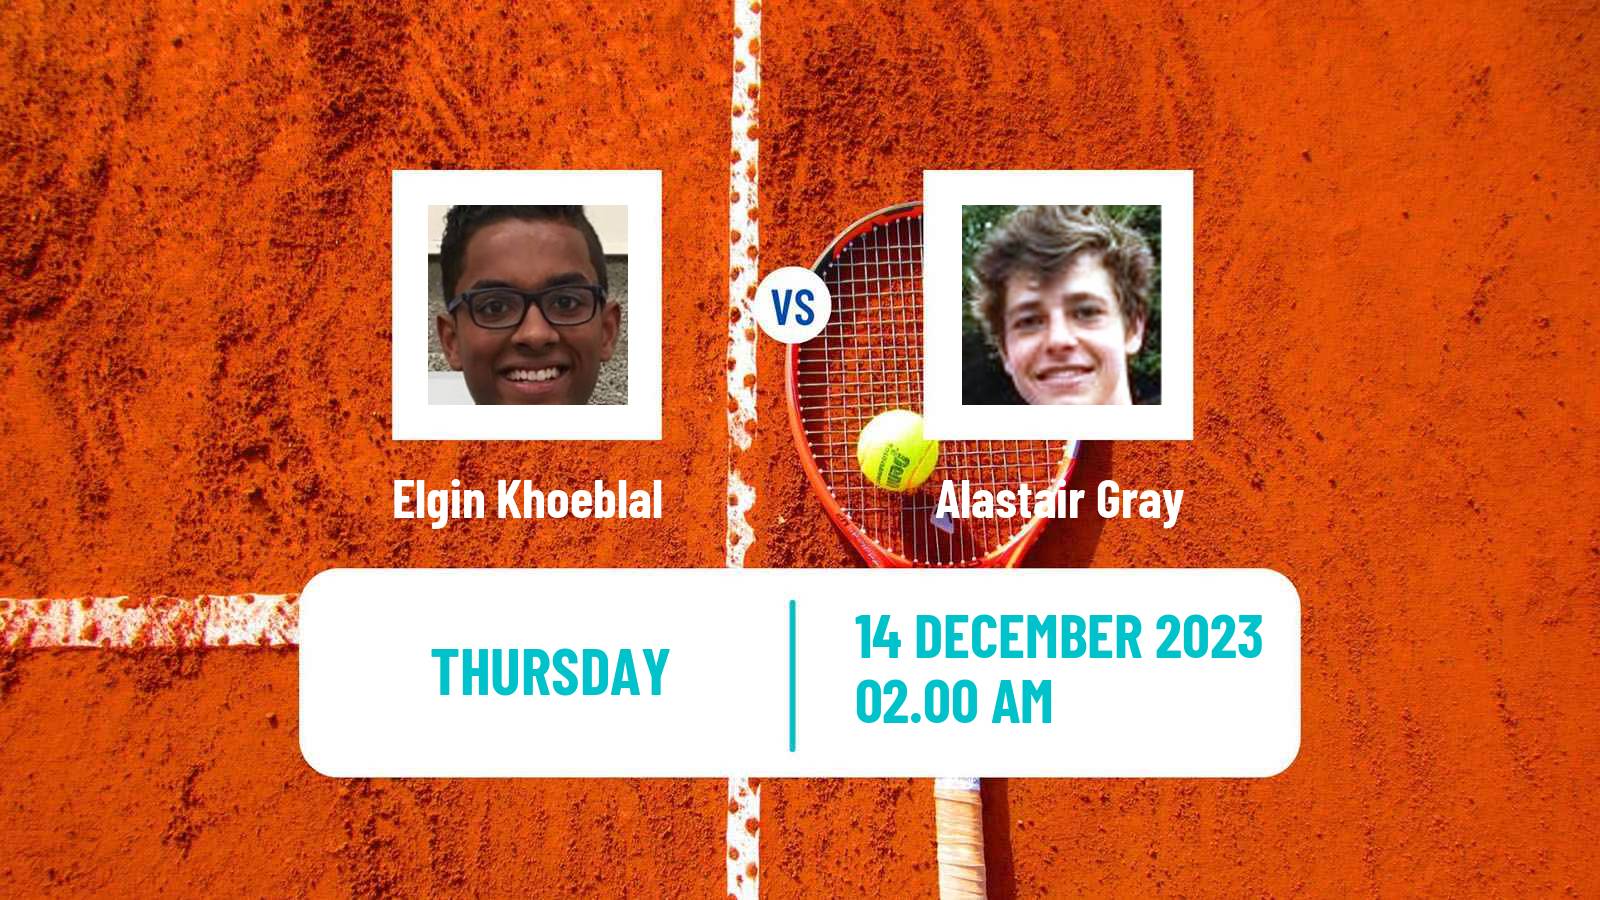 Tennis ITF M15 Zahra 3 Men Elgin Khoeblal - Alastair Gray